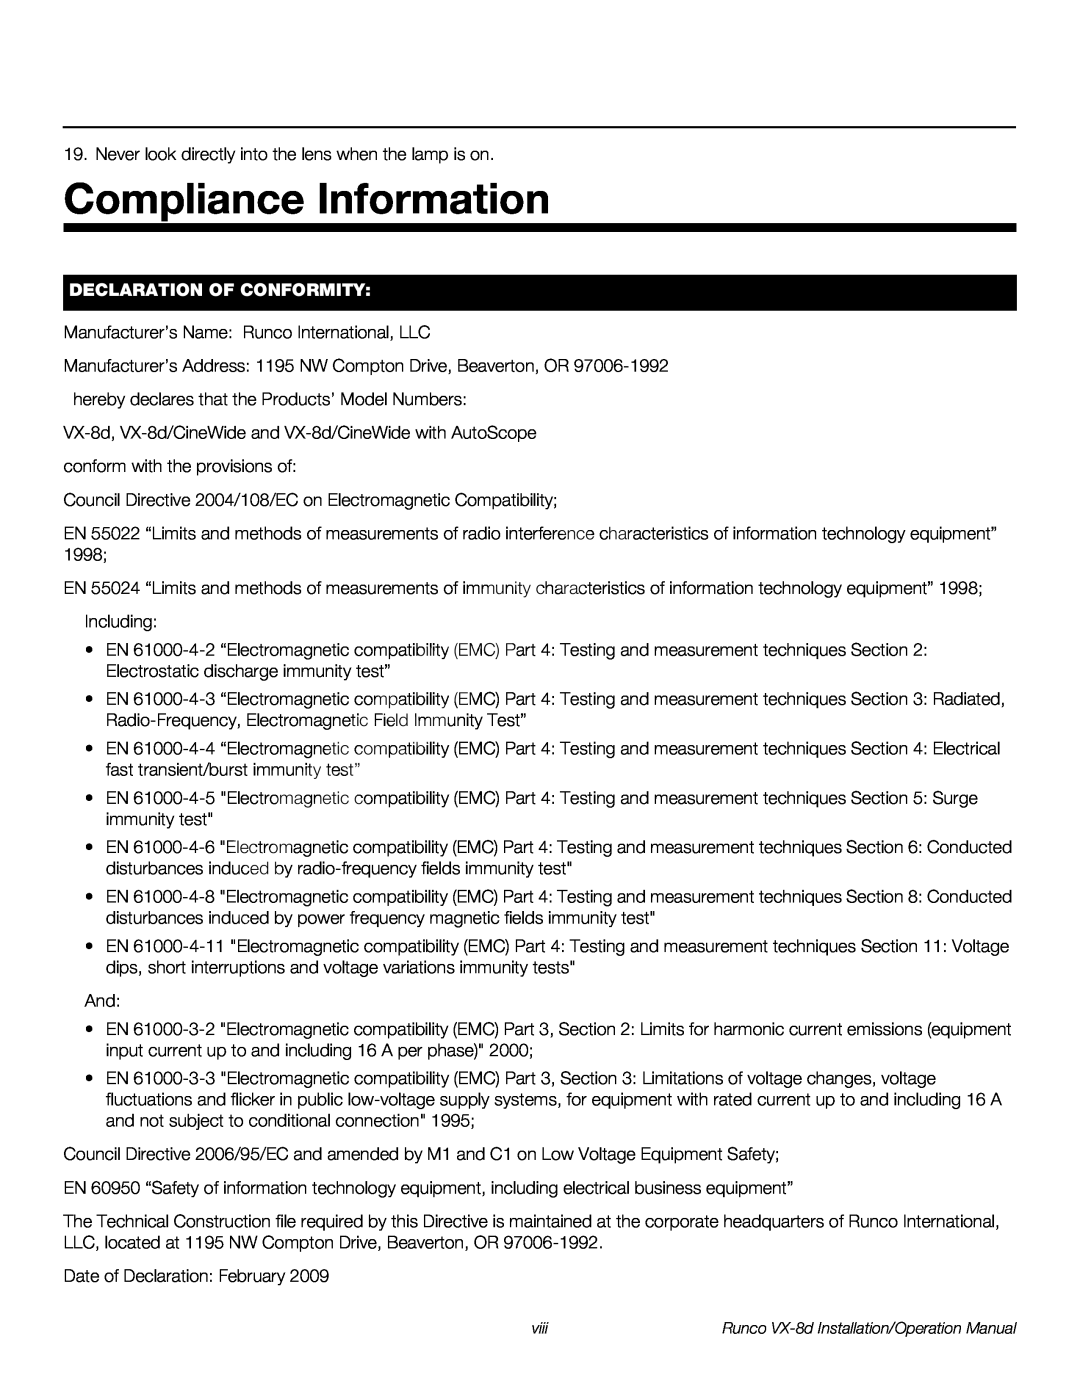 Runco VX-8D operation manual Compliance Information, Declaration Of Conformity 